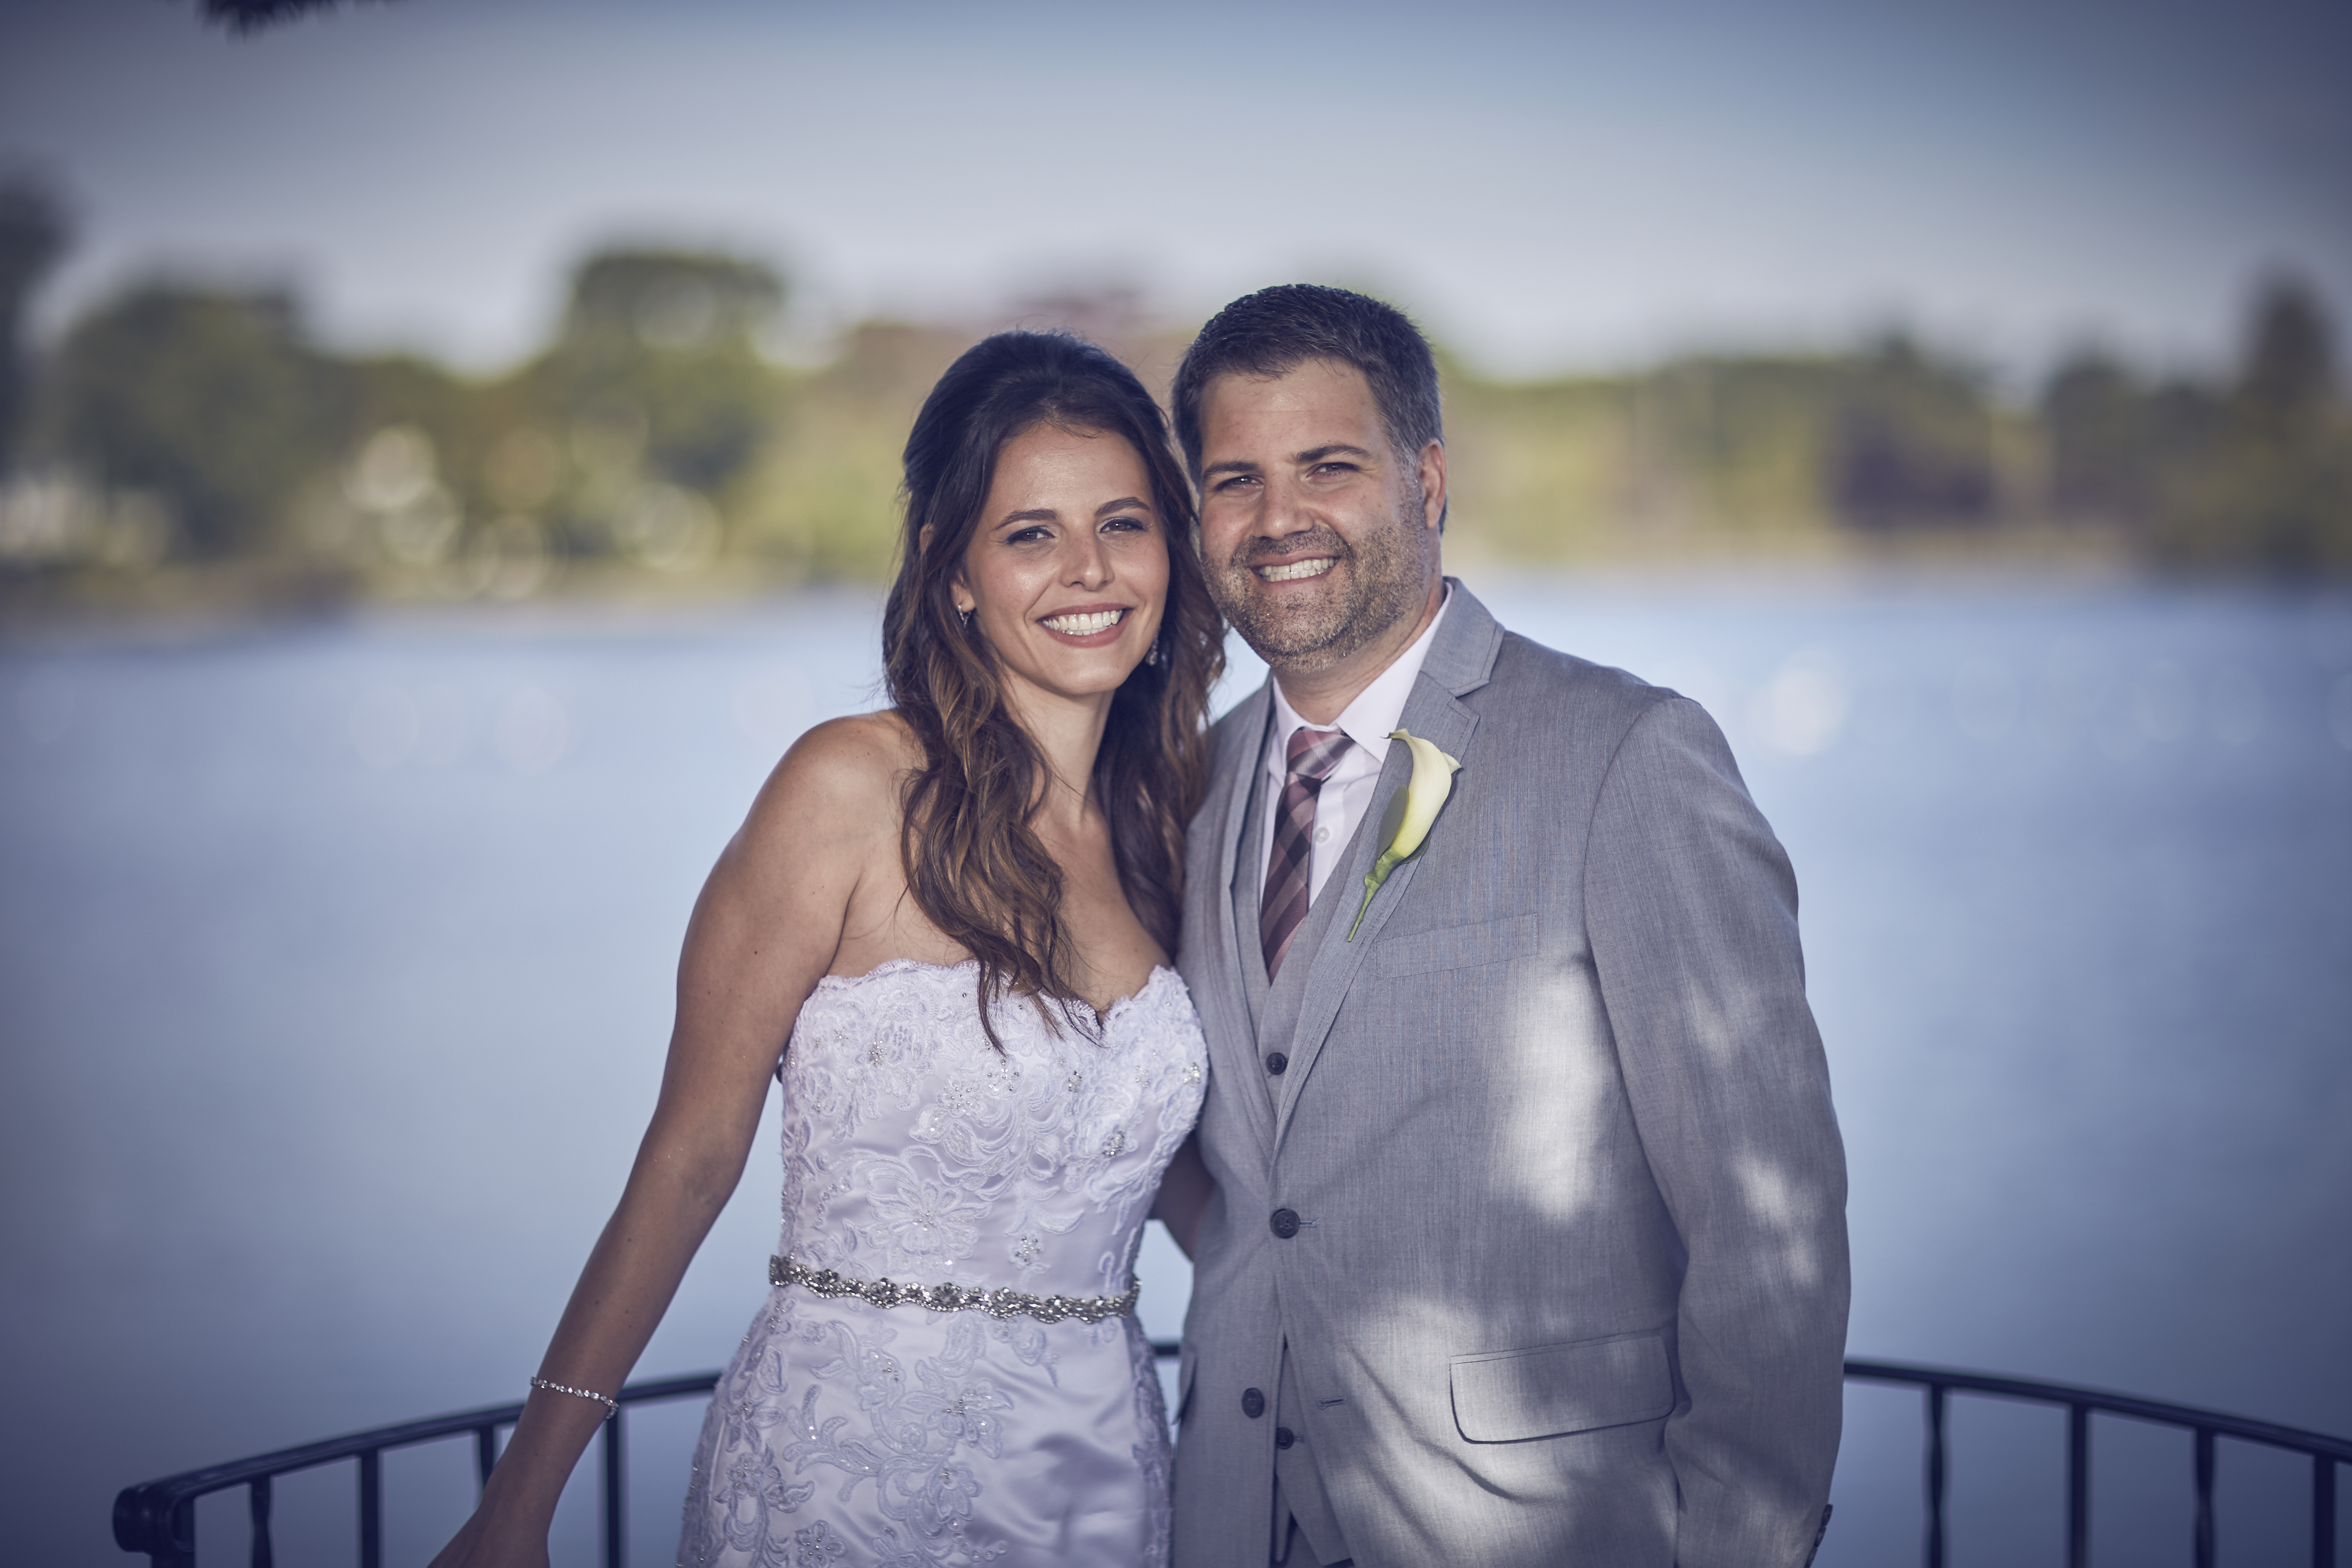 Venetian Yacht Club Wedding Photos by Miralli Photography